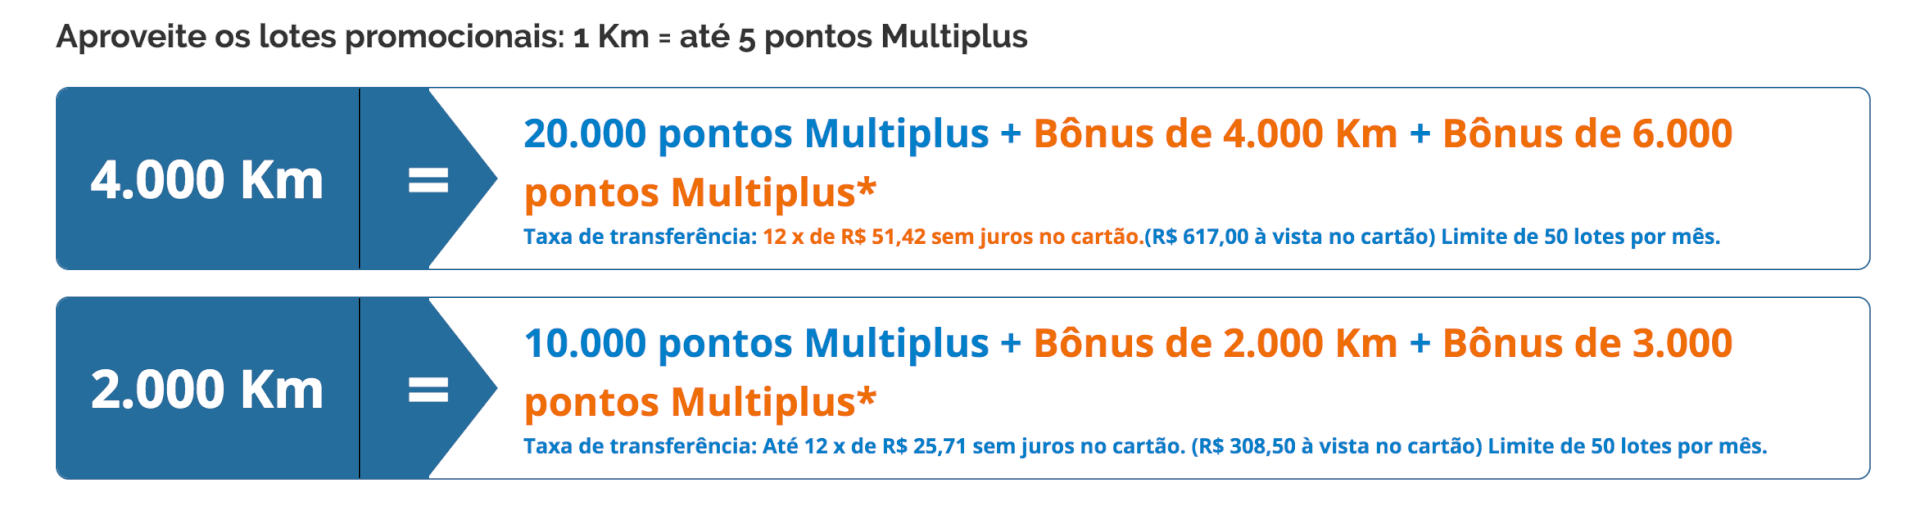 Lotes Km com bônus para Multiplus